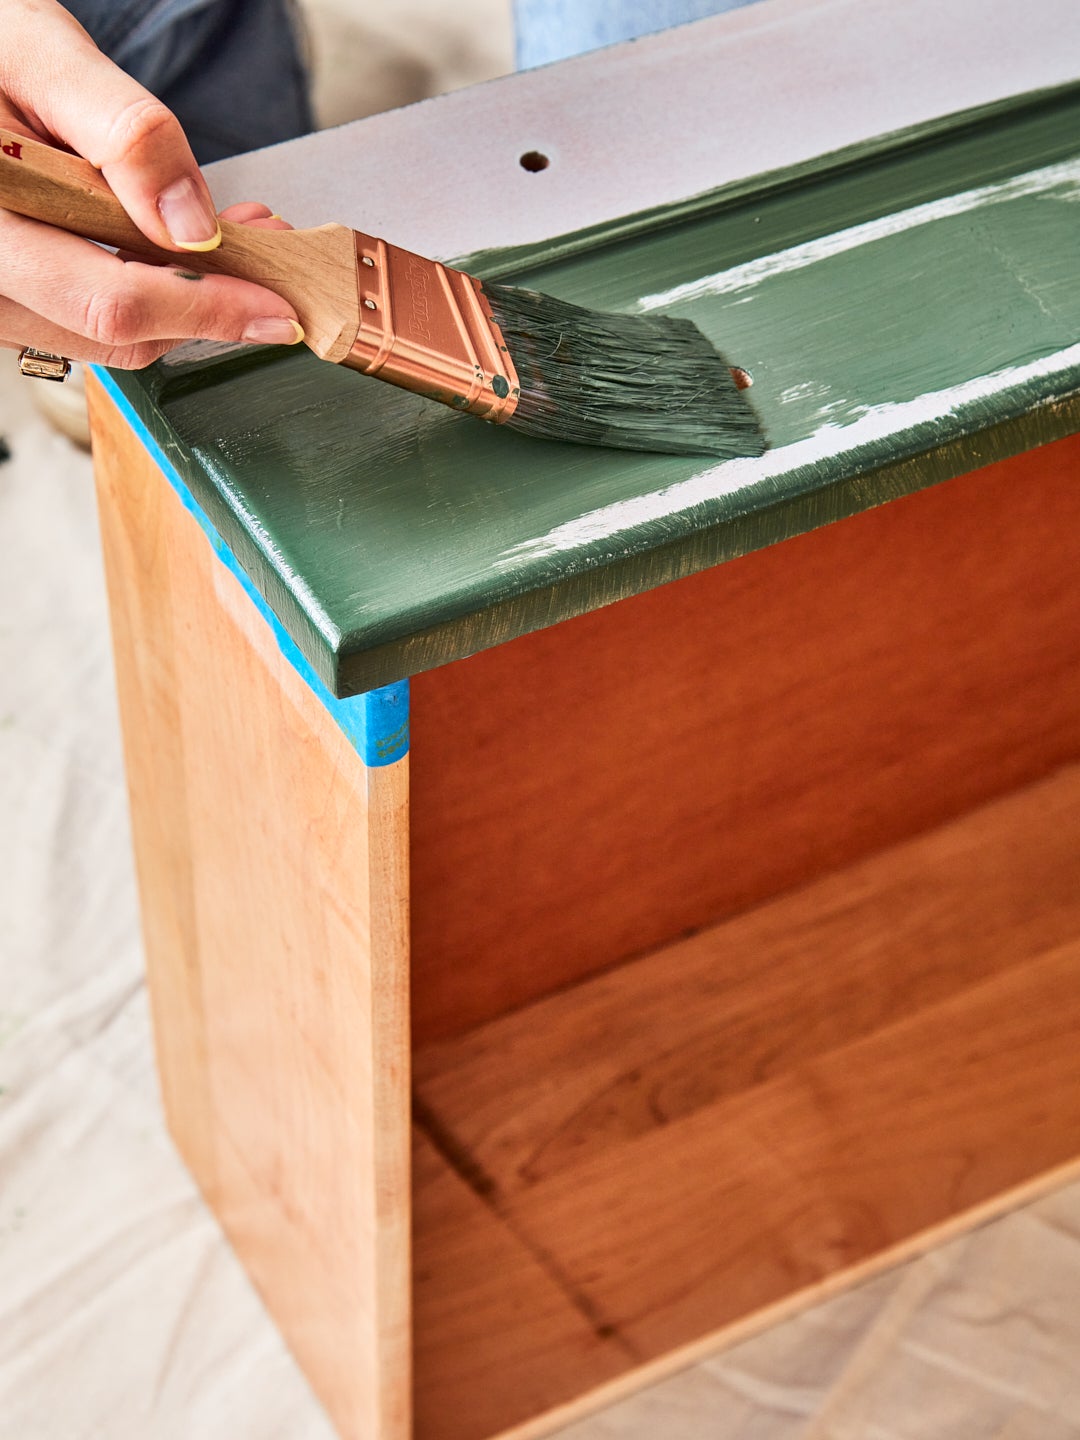 painting dresser drawers green